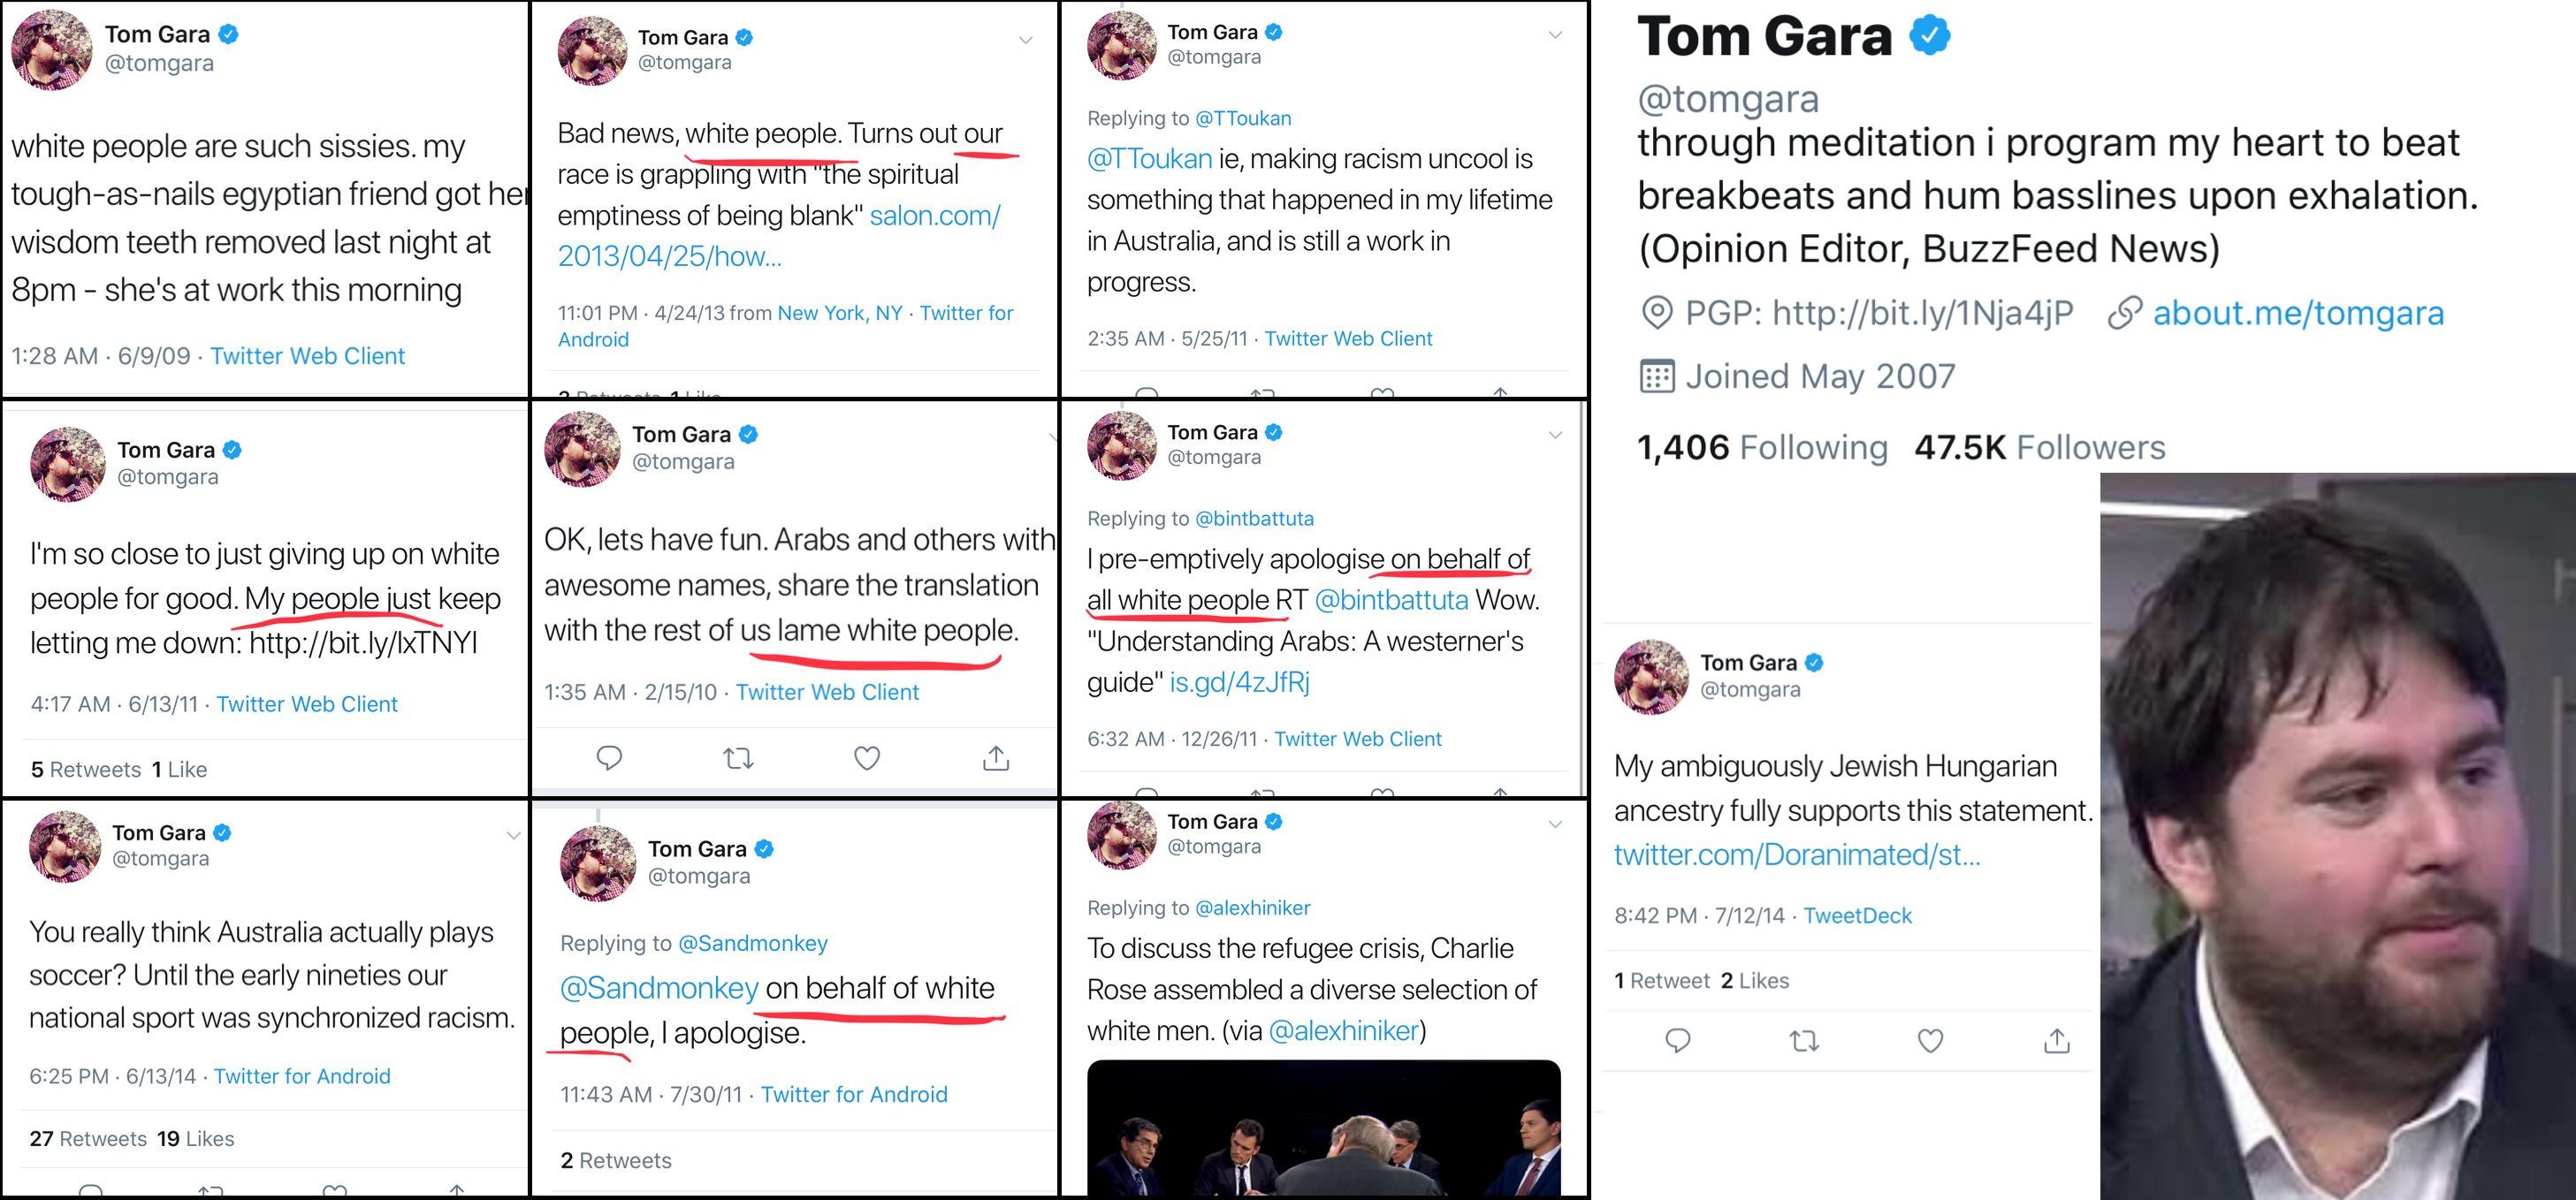 Tom Gara